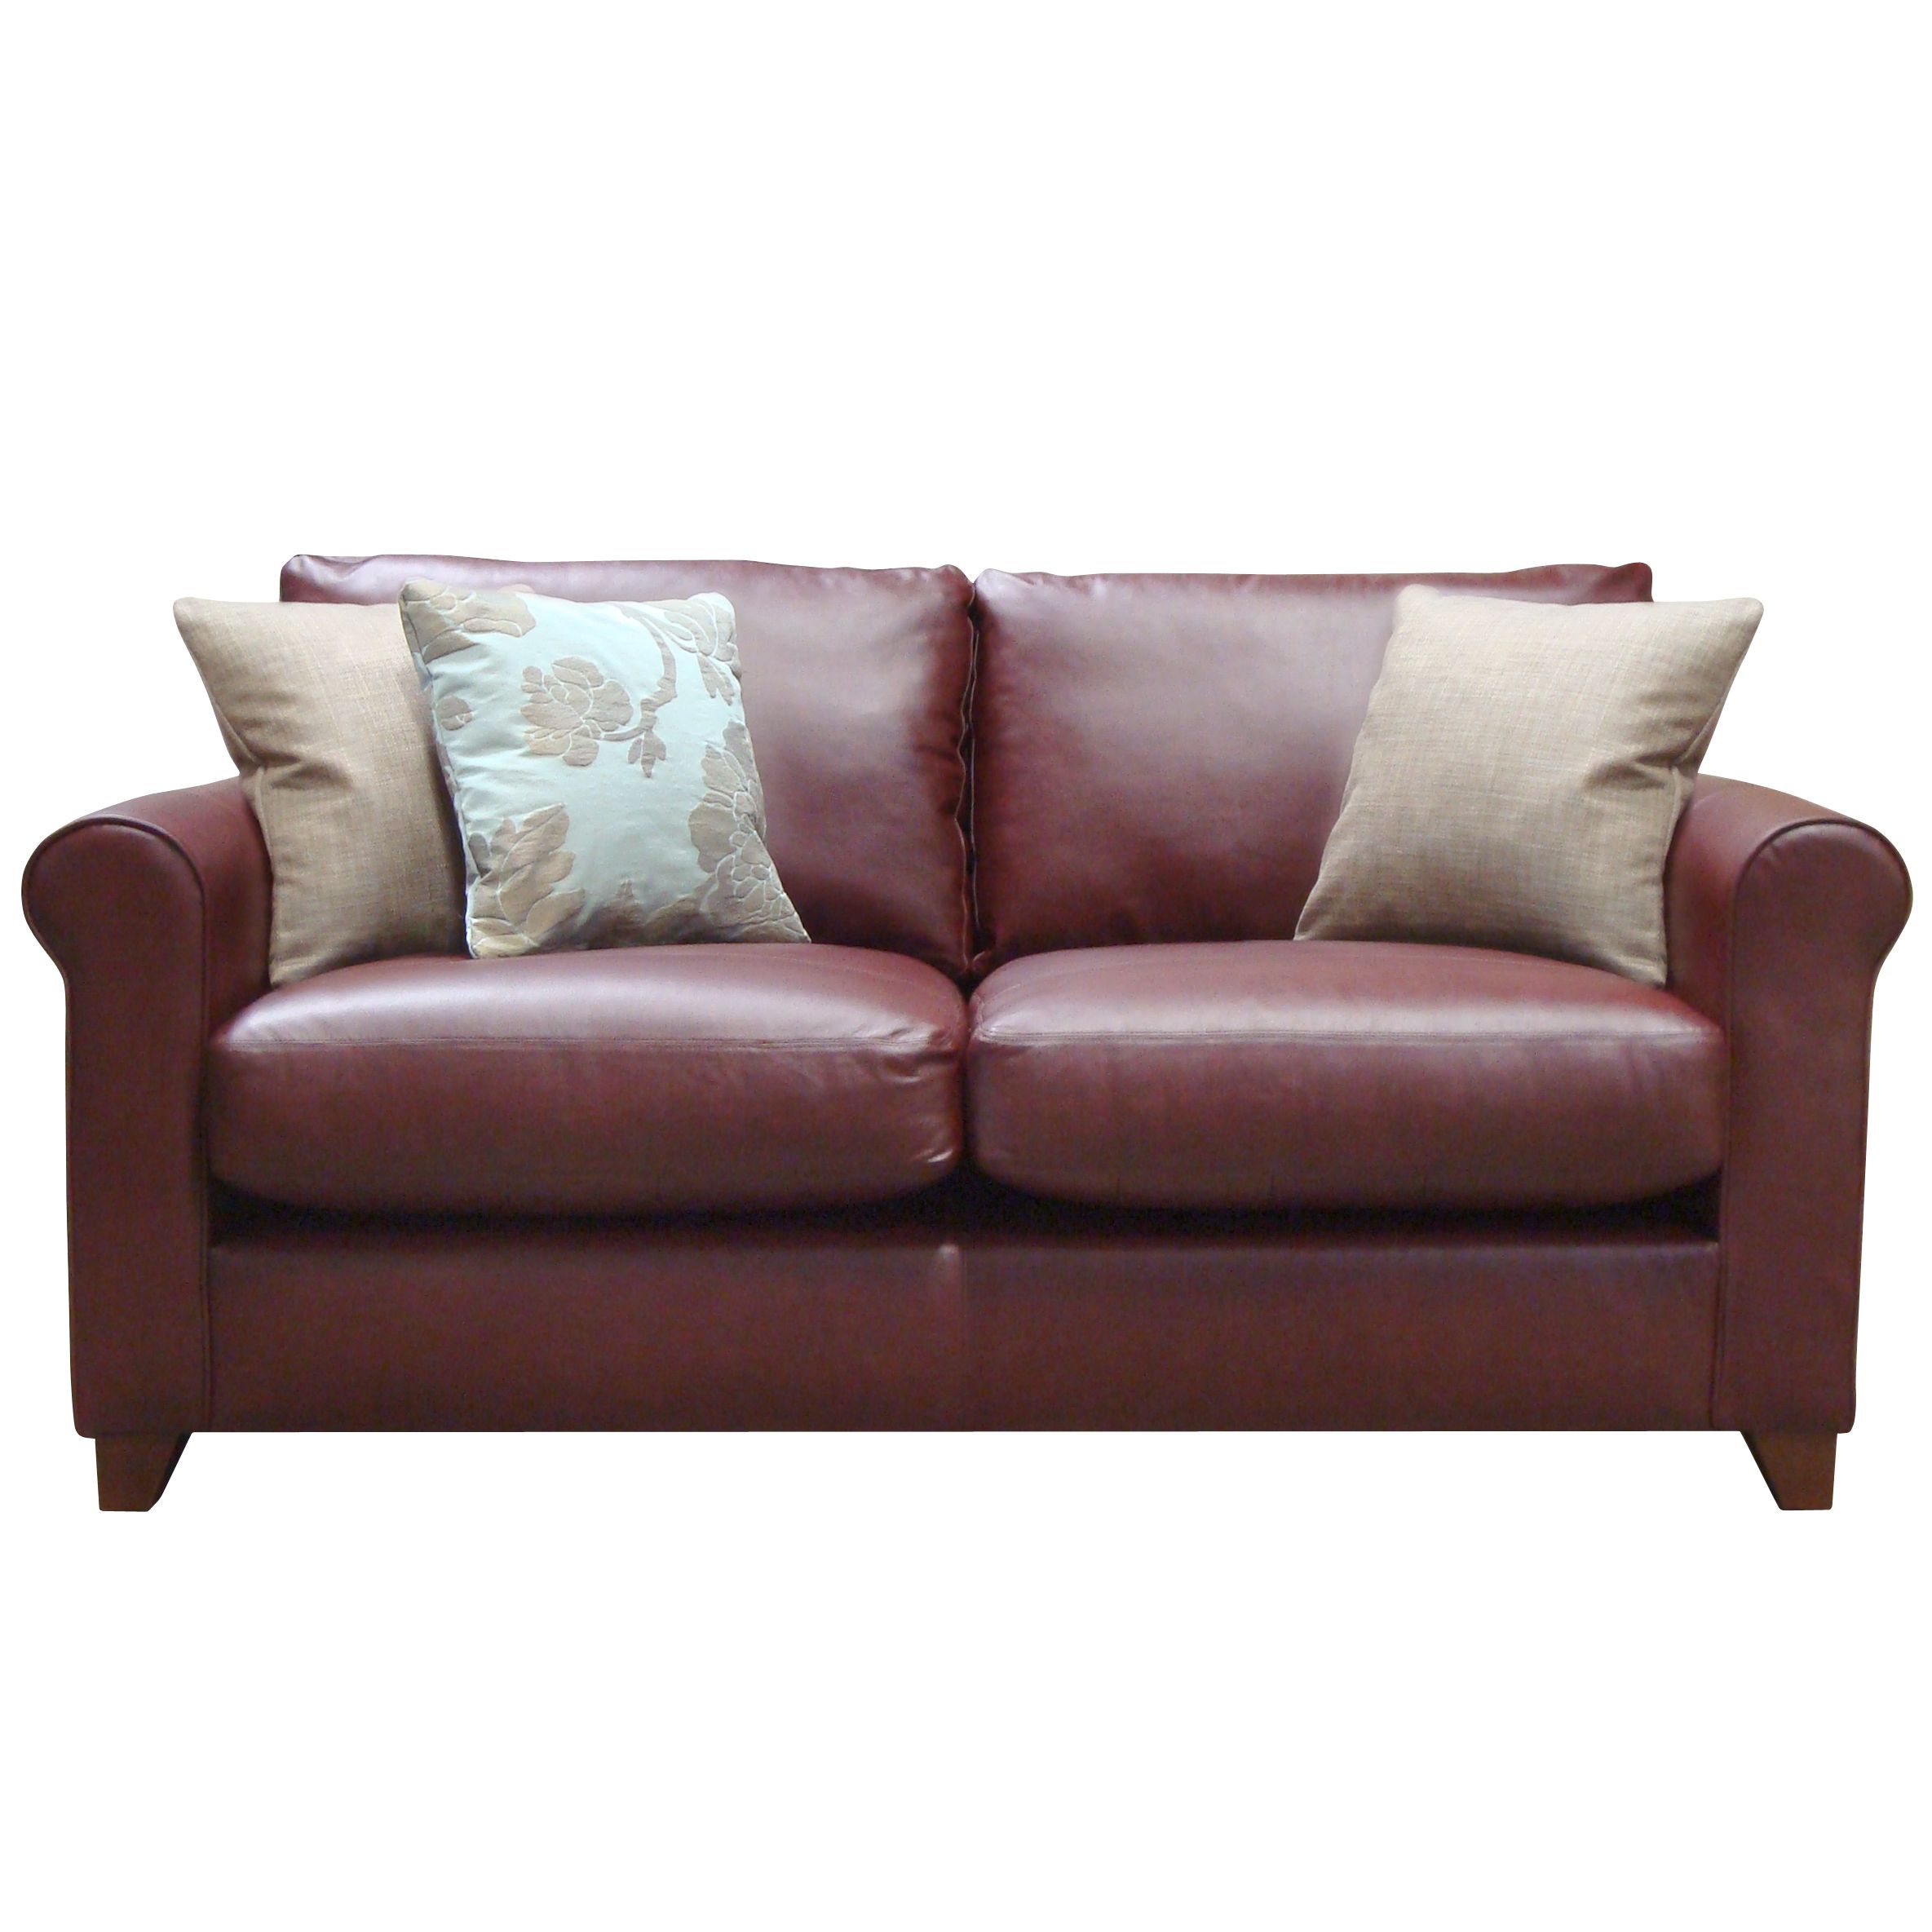 John Lewis Options Scrolled Arm Medium Sofa, Model 21, Denver Leather at JohnLewis